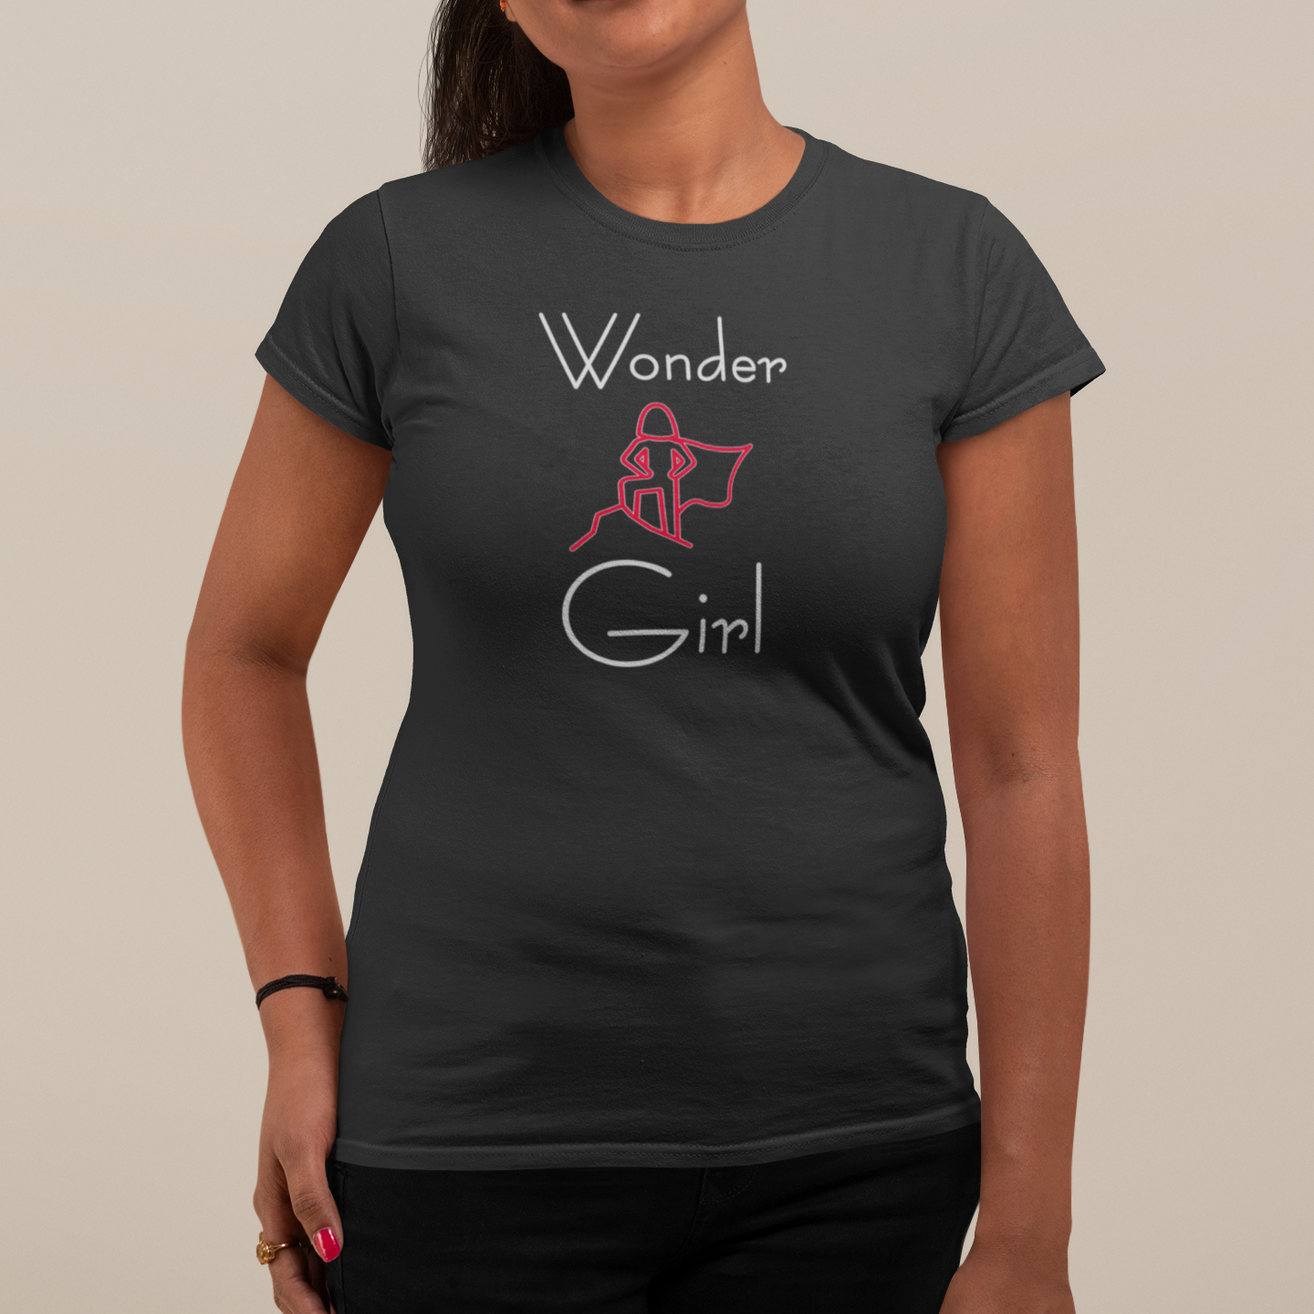 Wonder Girl Cotton Tee - Comfortable and Stylish Women's T-Shirt